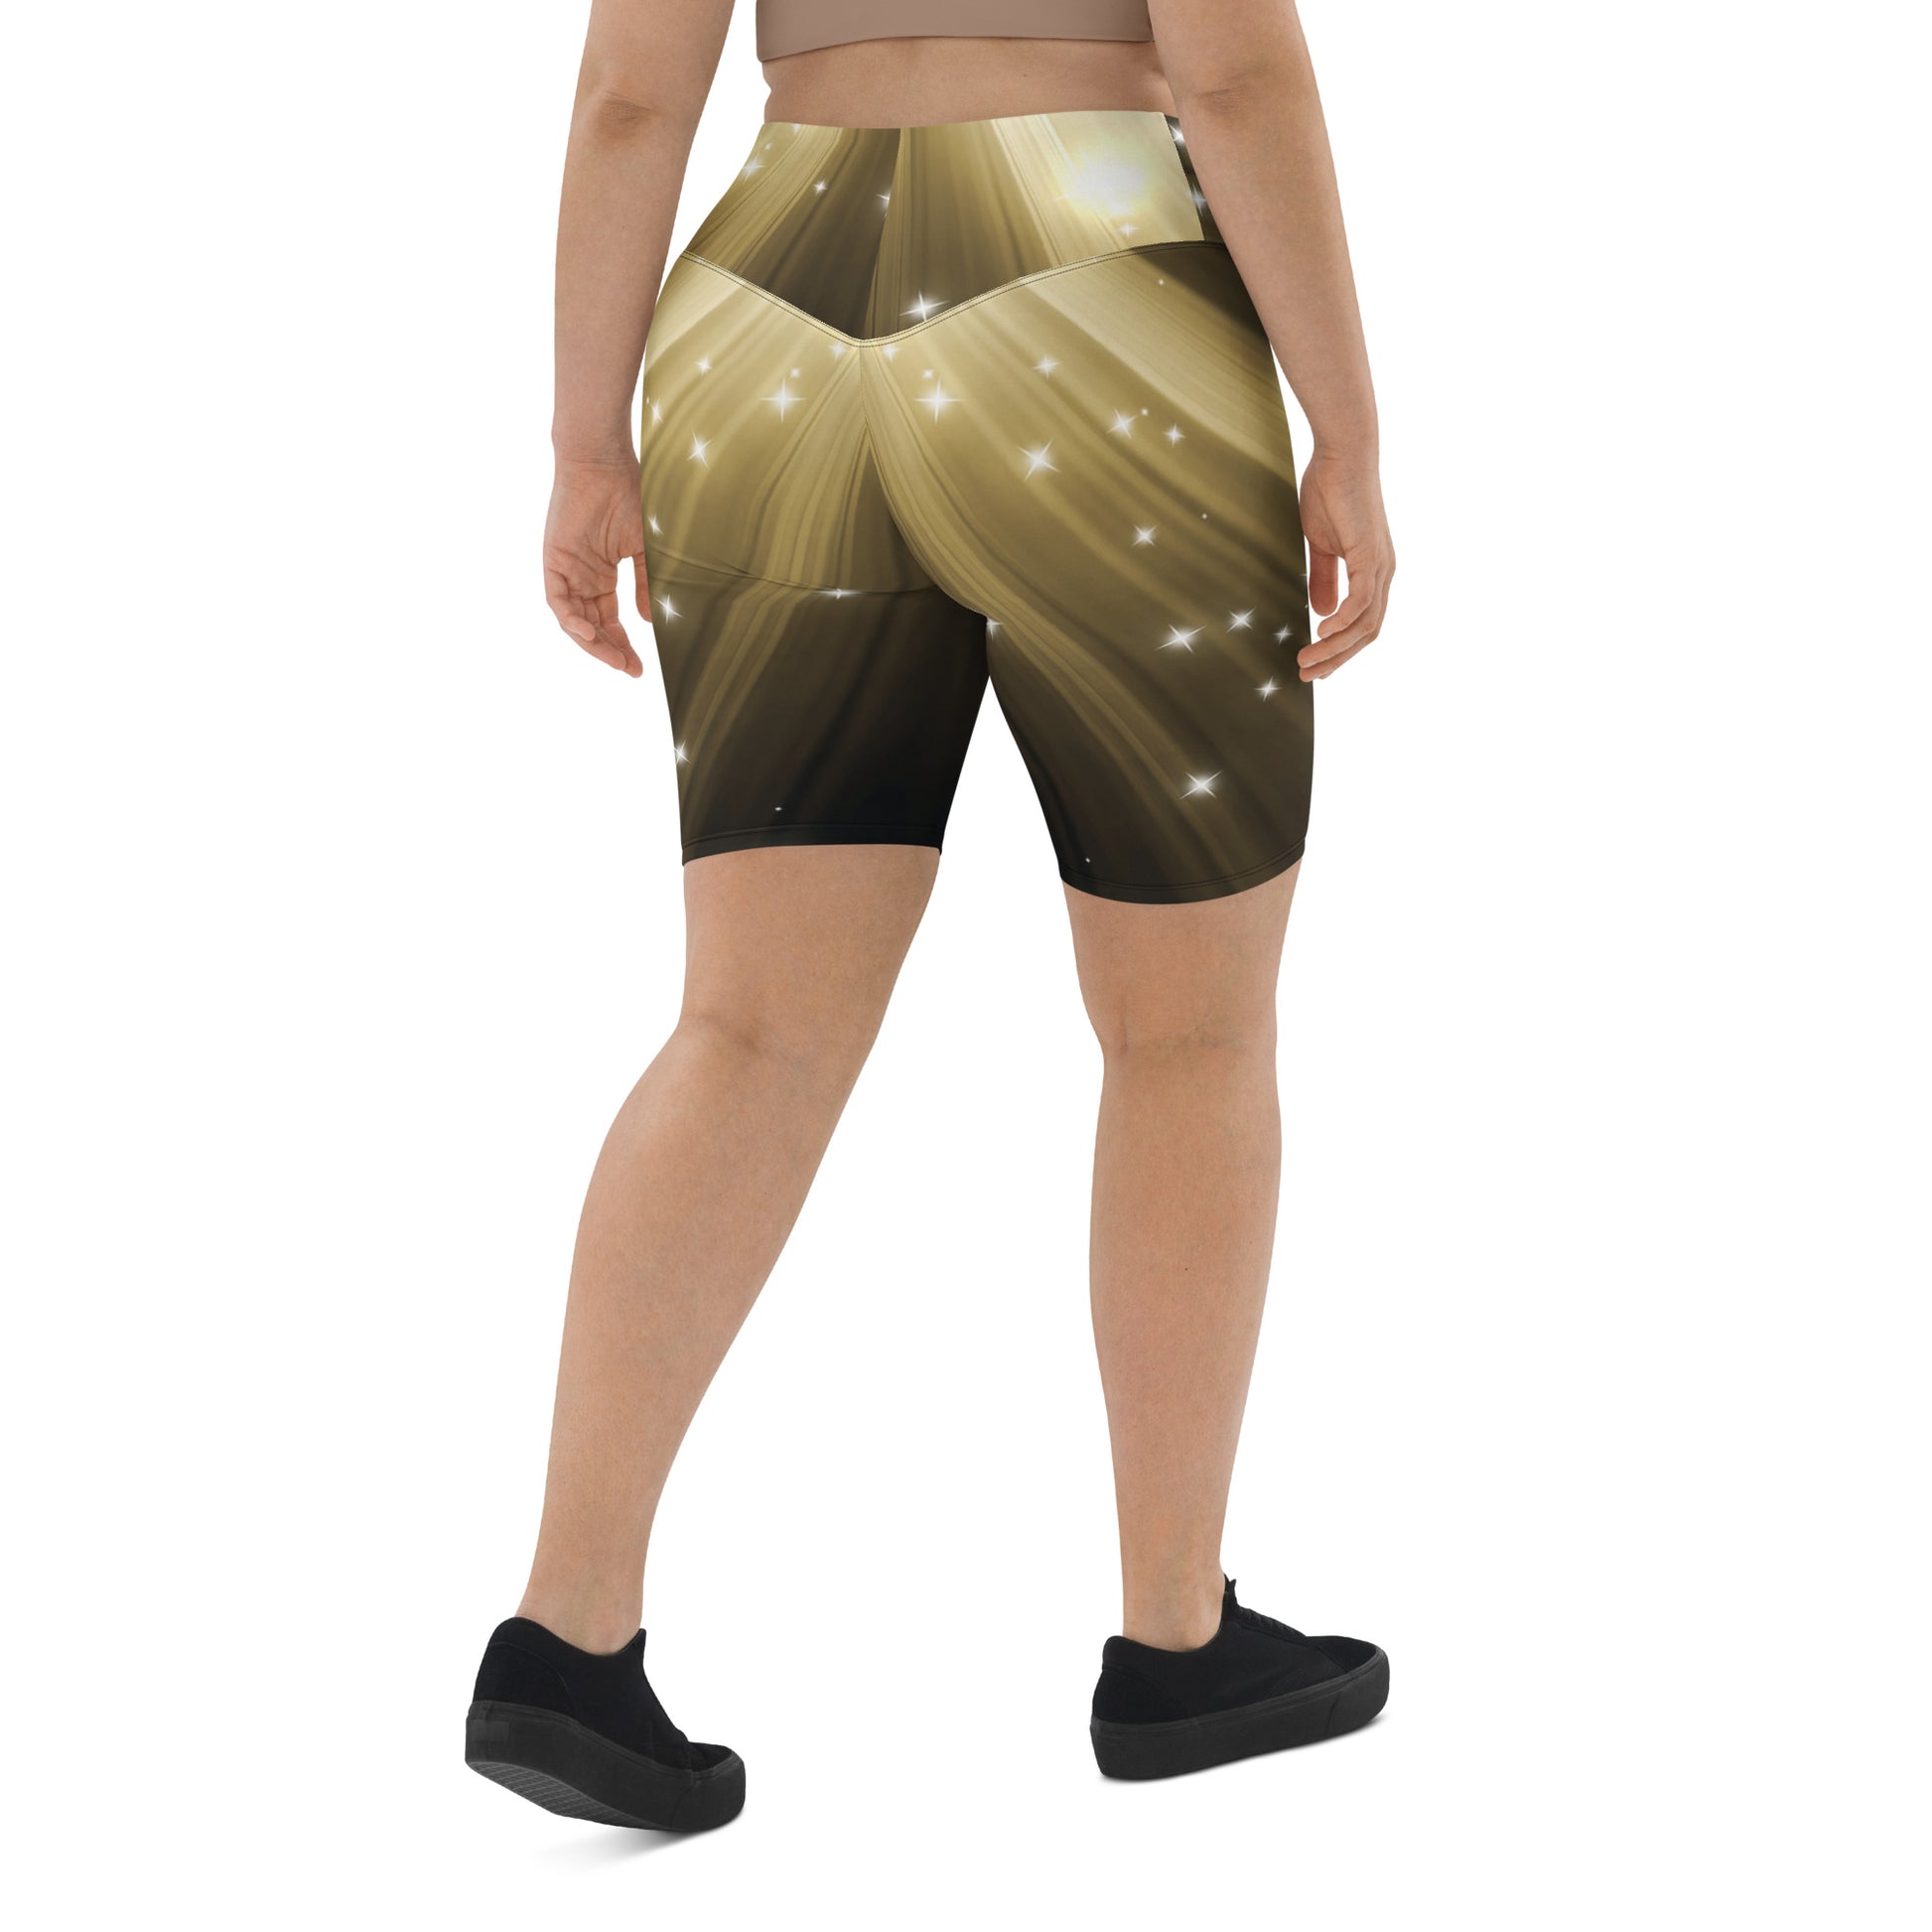 Plus Size Female artist shine bright rocking your Gold Spotlyght Biker Shorts